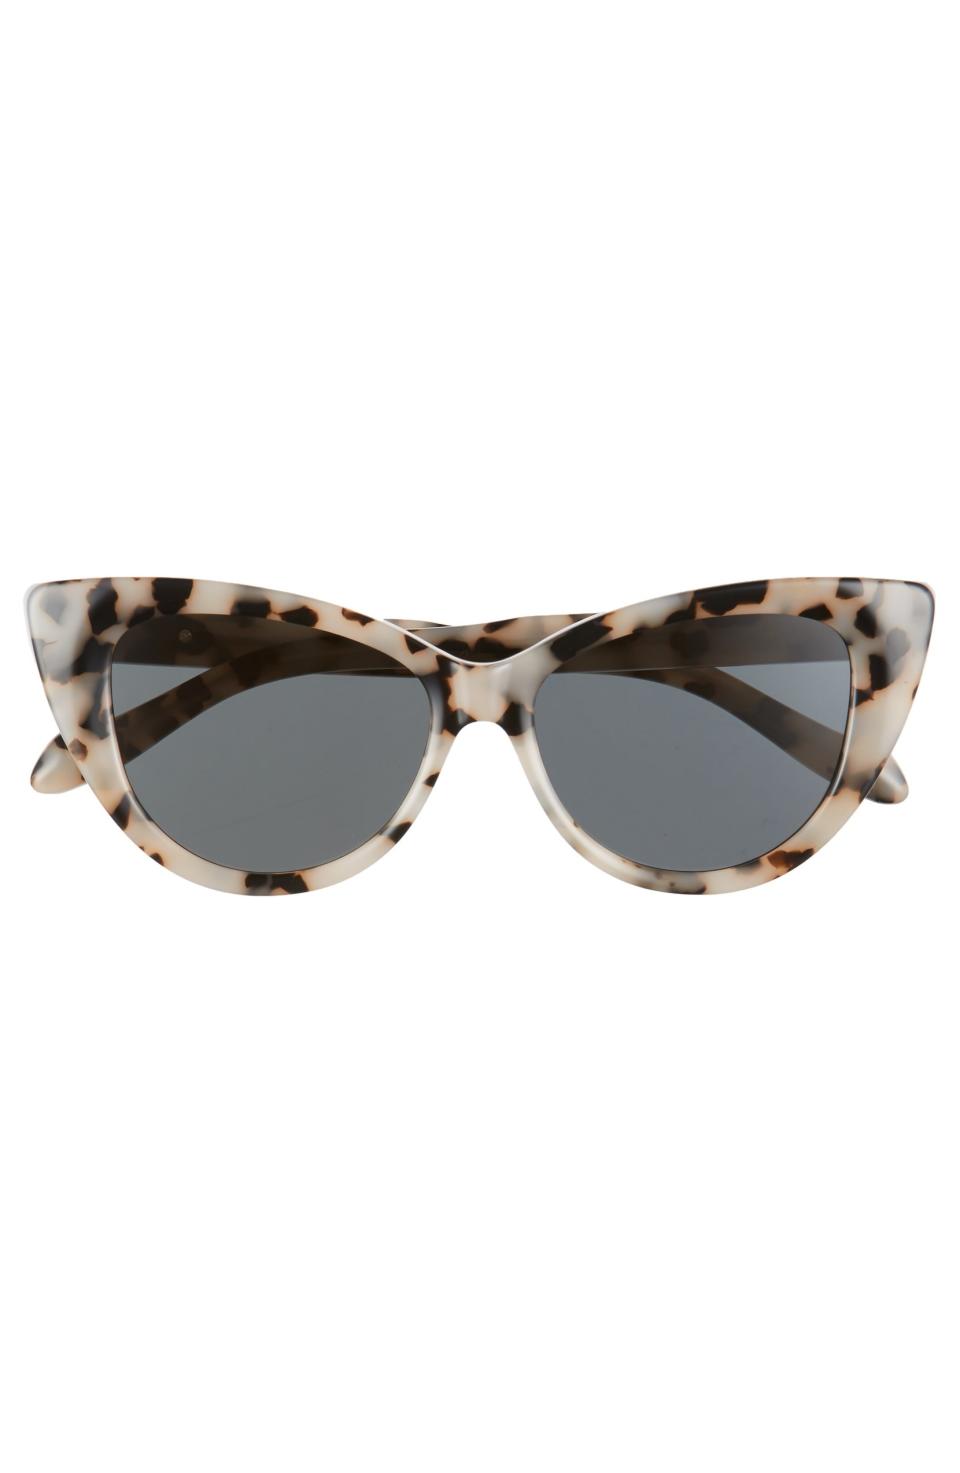 Sonix Kyoto 51mm Cat Eye Sunglasses, $120 $79.90, Nordstrom